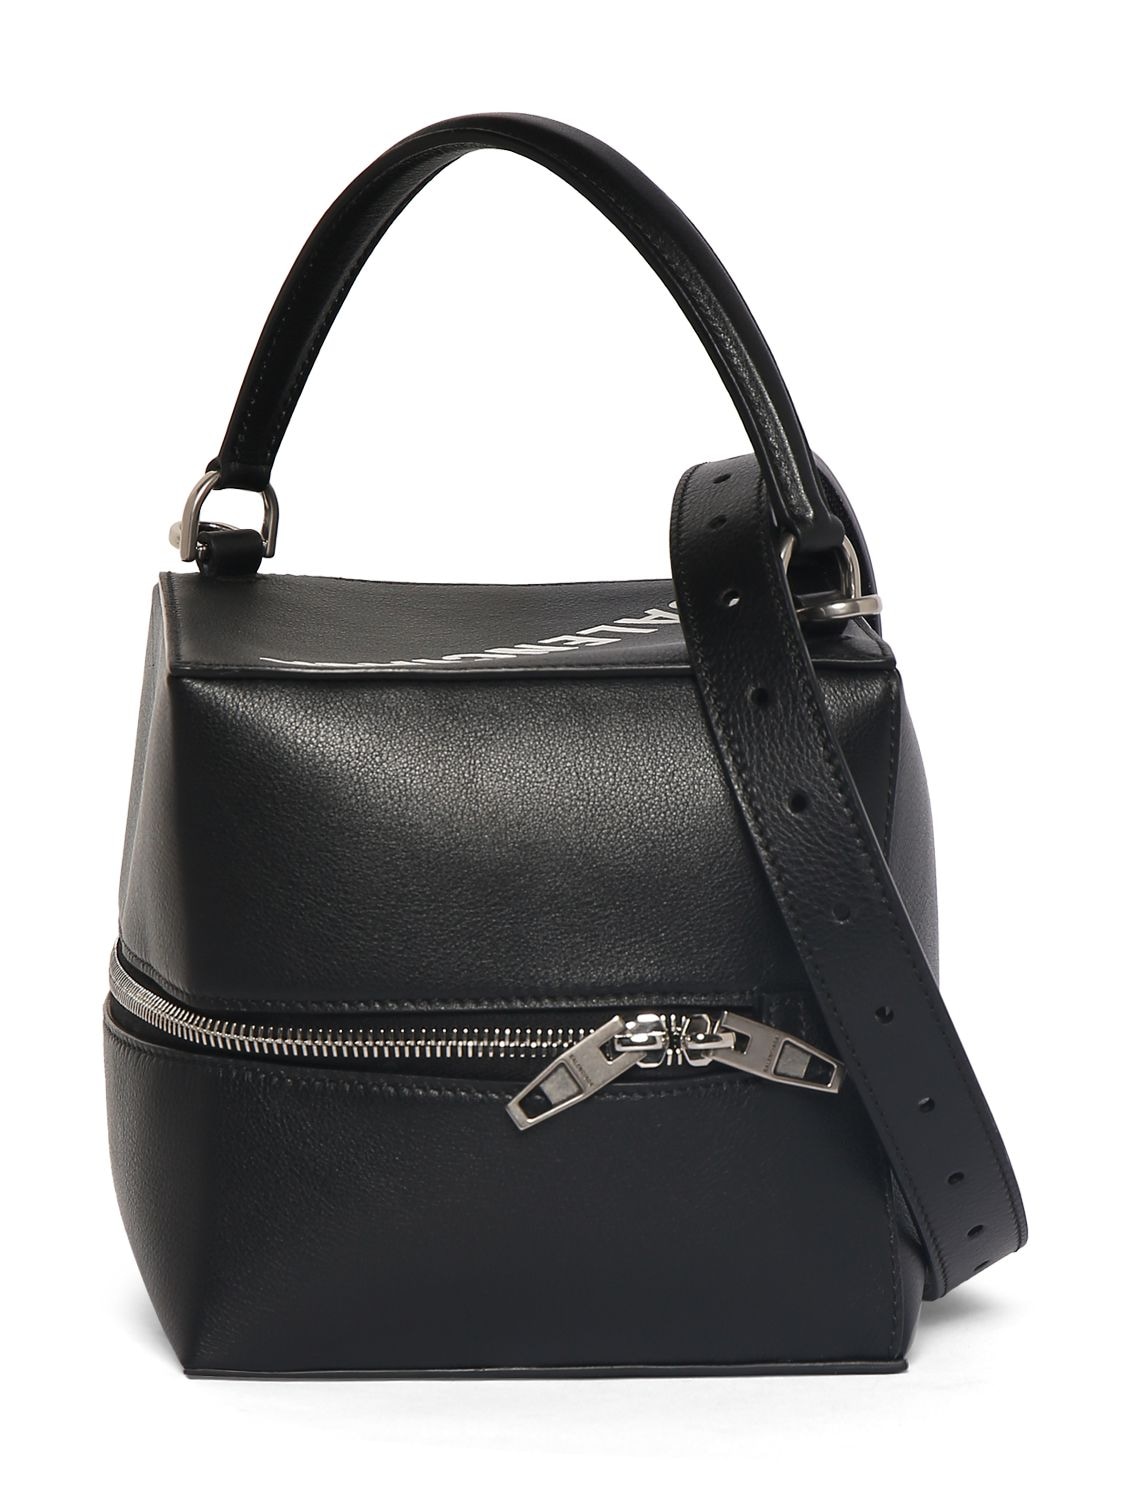 Balenciaga Small 4x4 Leather Top Handle Bag In Black